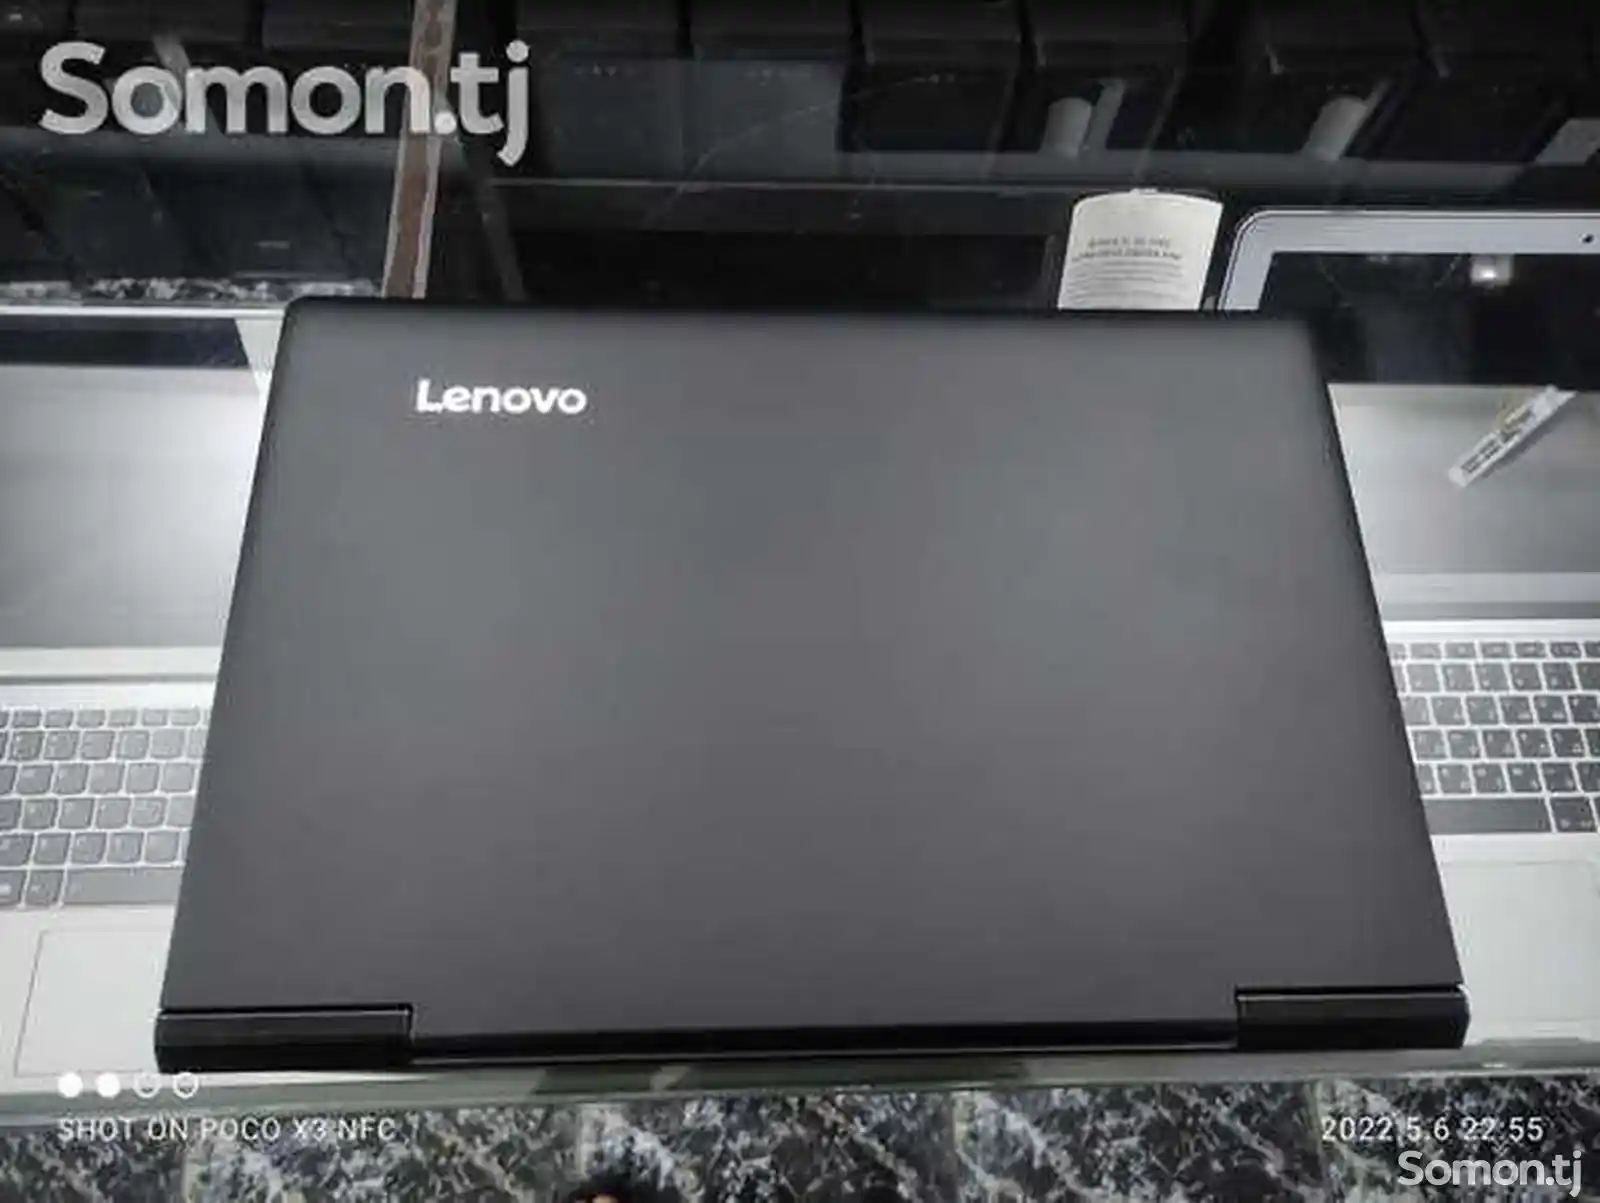 Игровой Ноутбук Lenovo Ideapad 700 Gaming Core i5-6300HQ GTX 950M 4GB 256GB 1TB-5